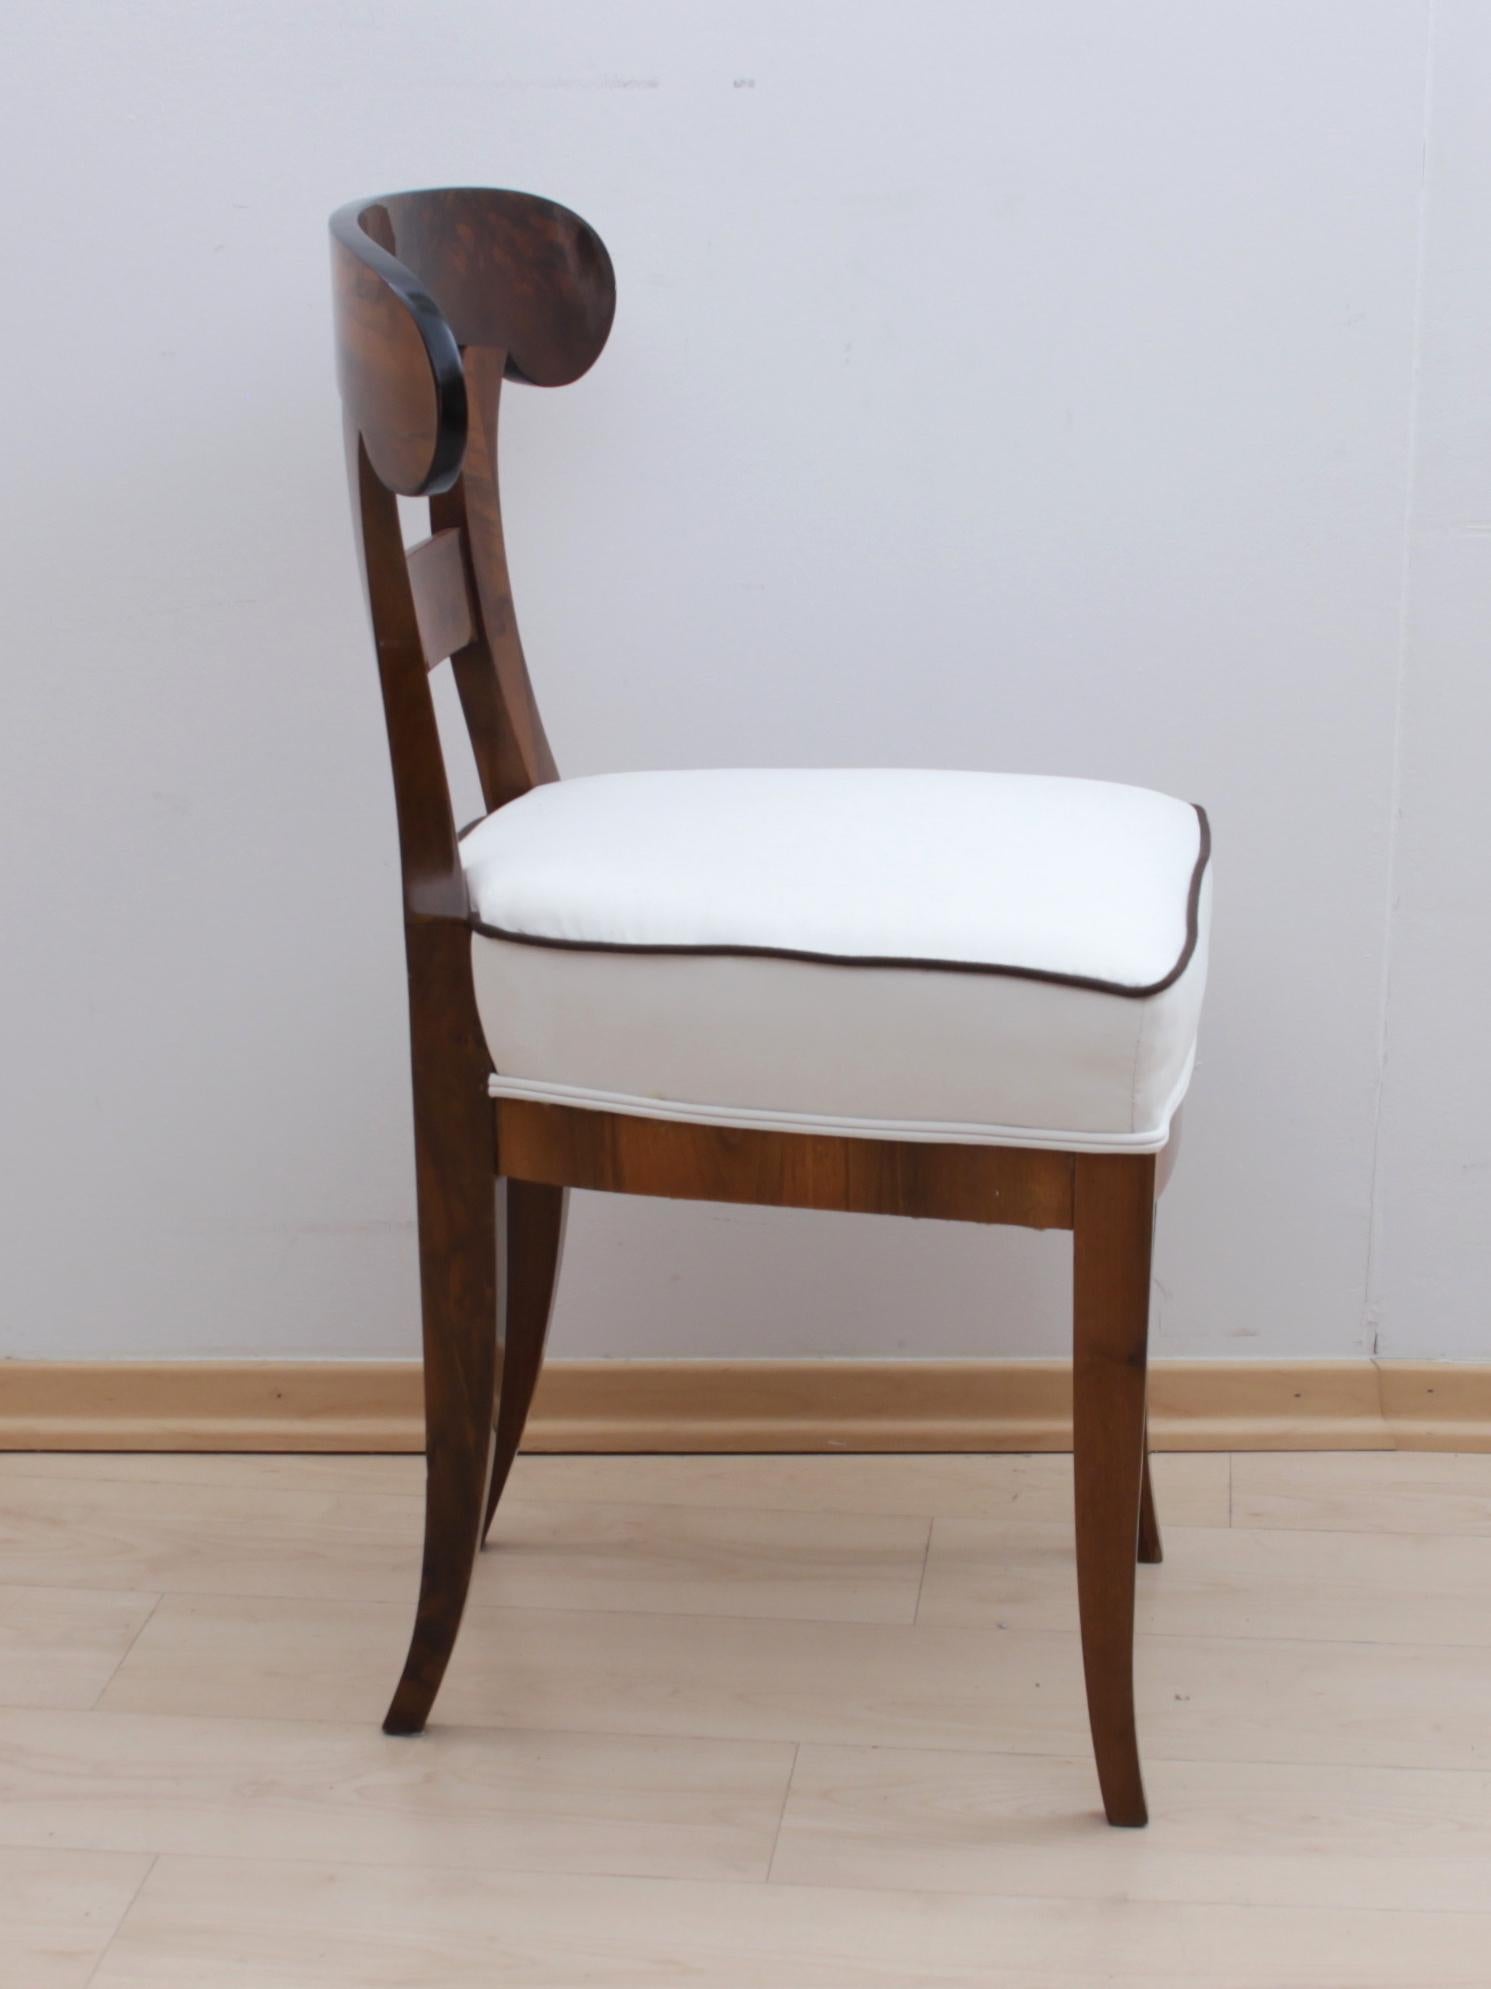 Biedermeier Shovel Chair, Walnut, South Germany, circa 1820 (Deutsch)